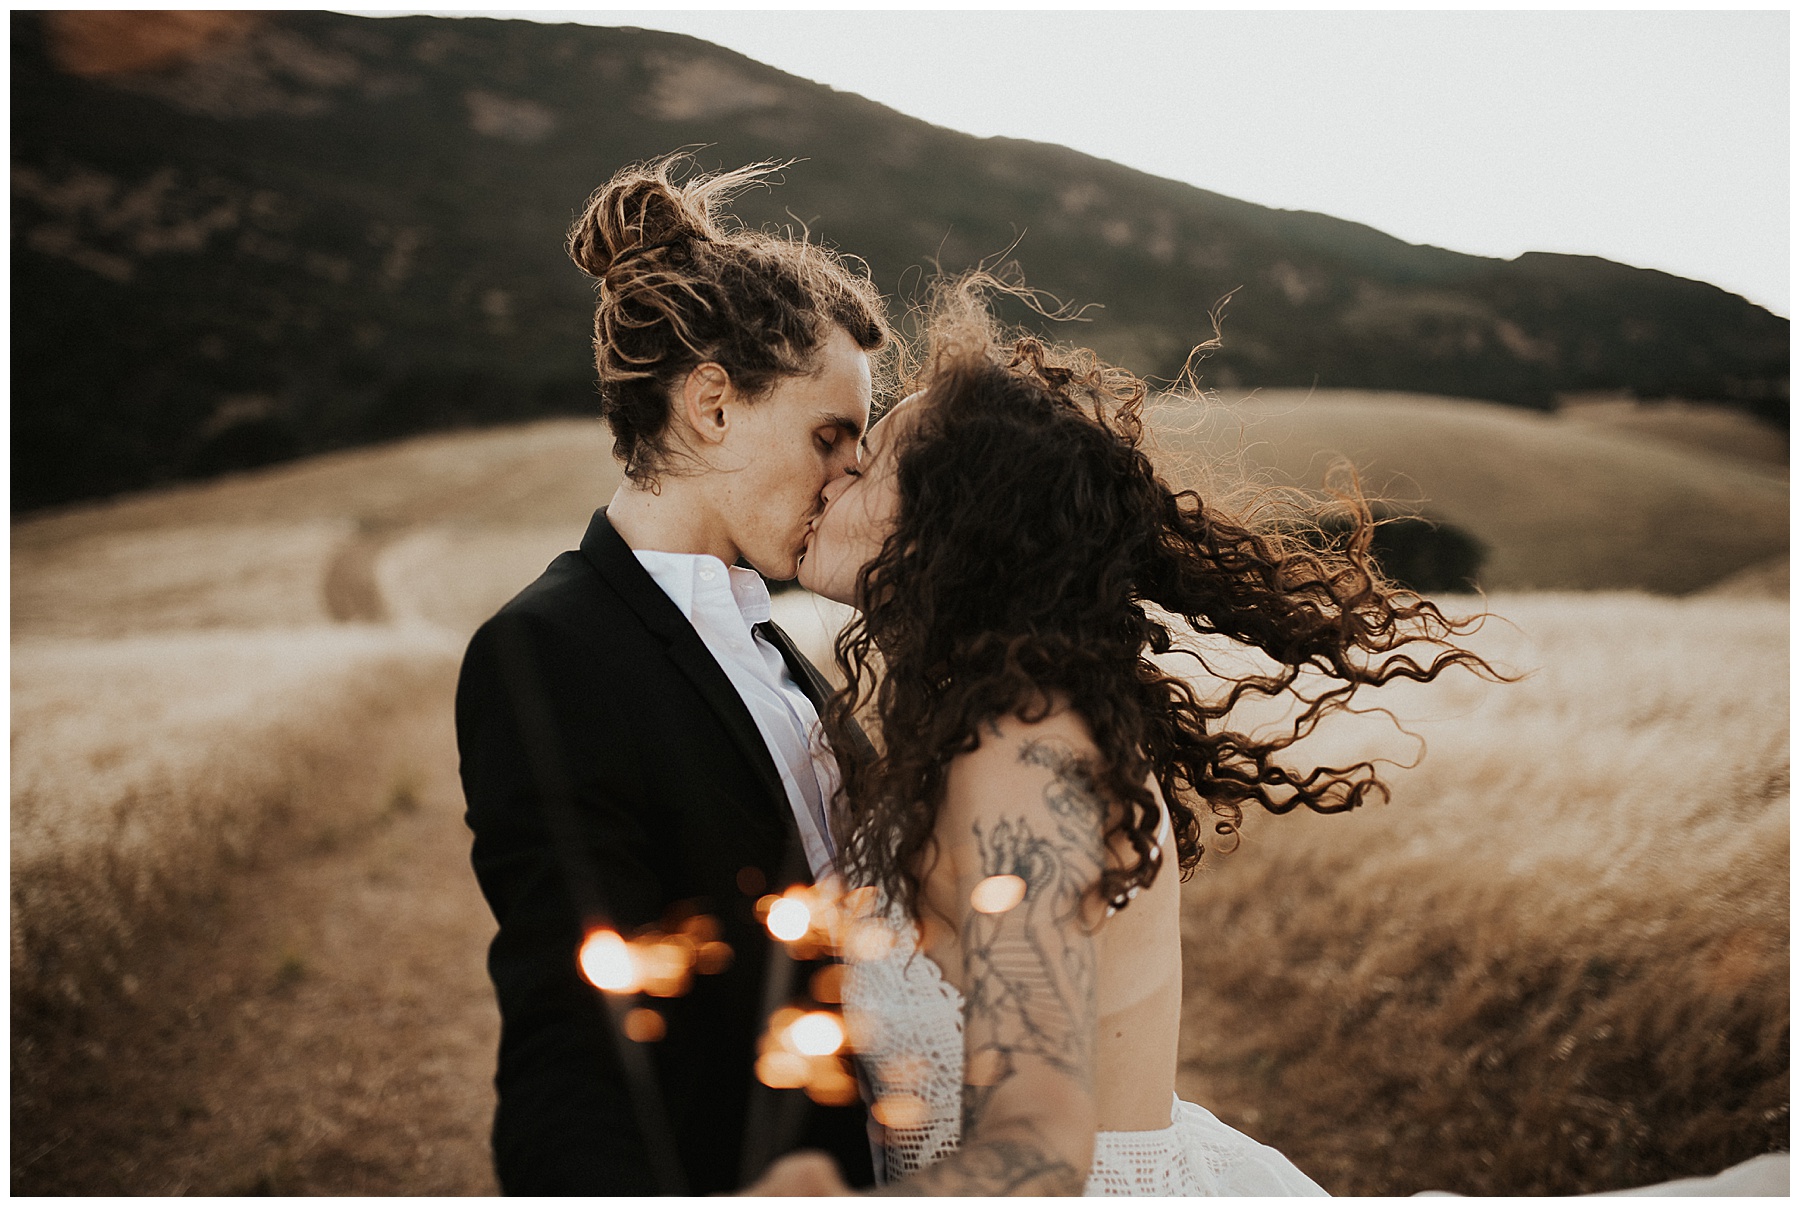 Bohemian elopement - California elopement | Juju Photography - California, San Francisco & Destination wedding photographer 